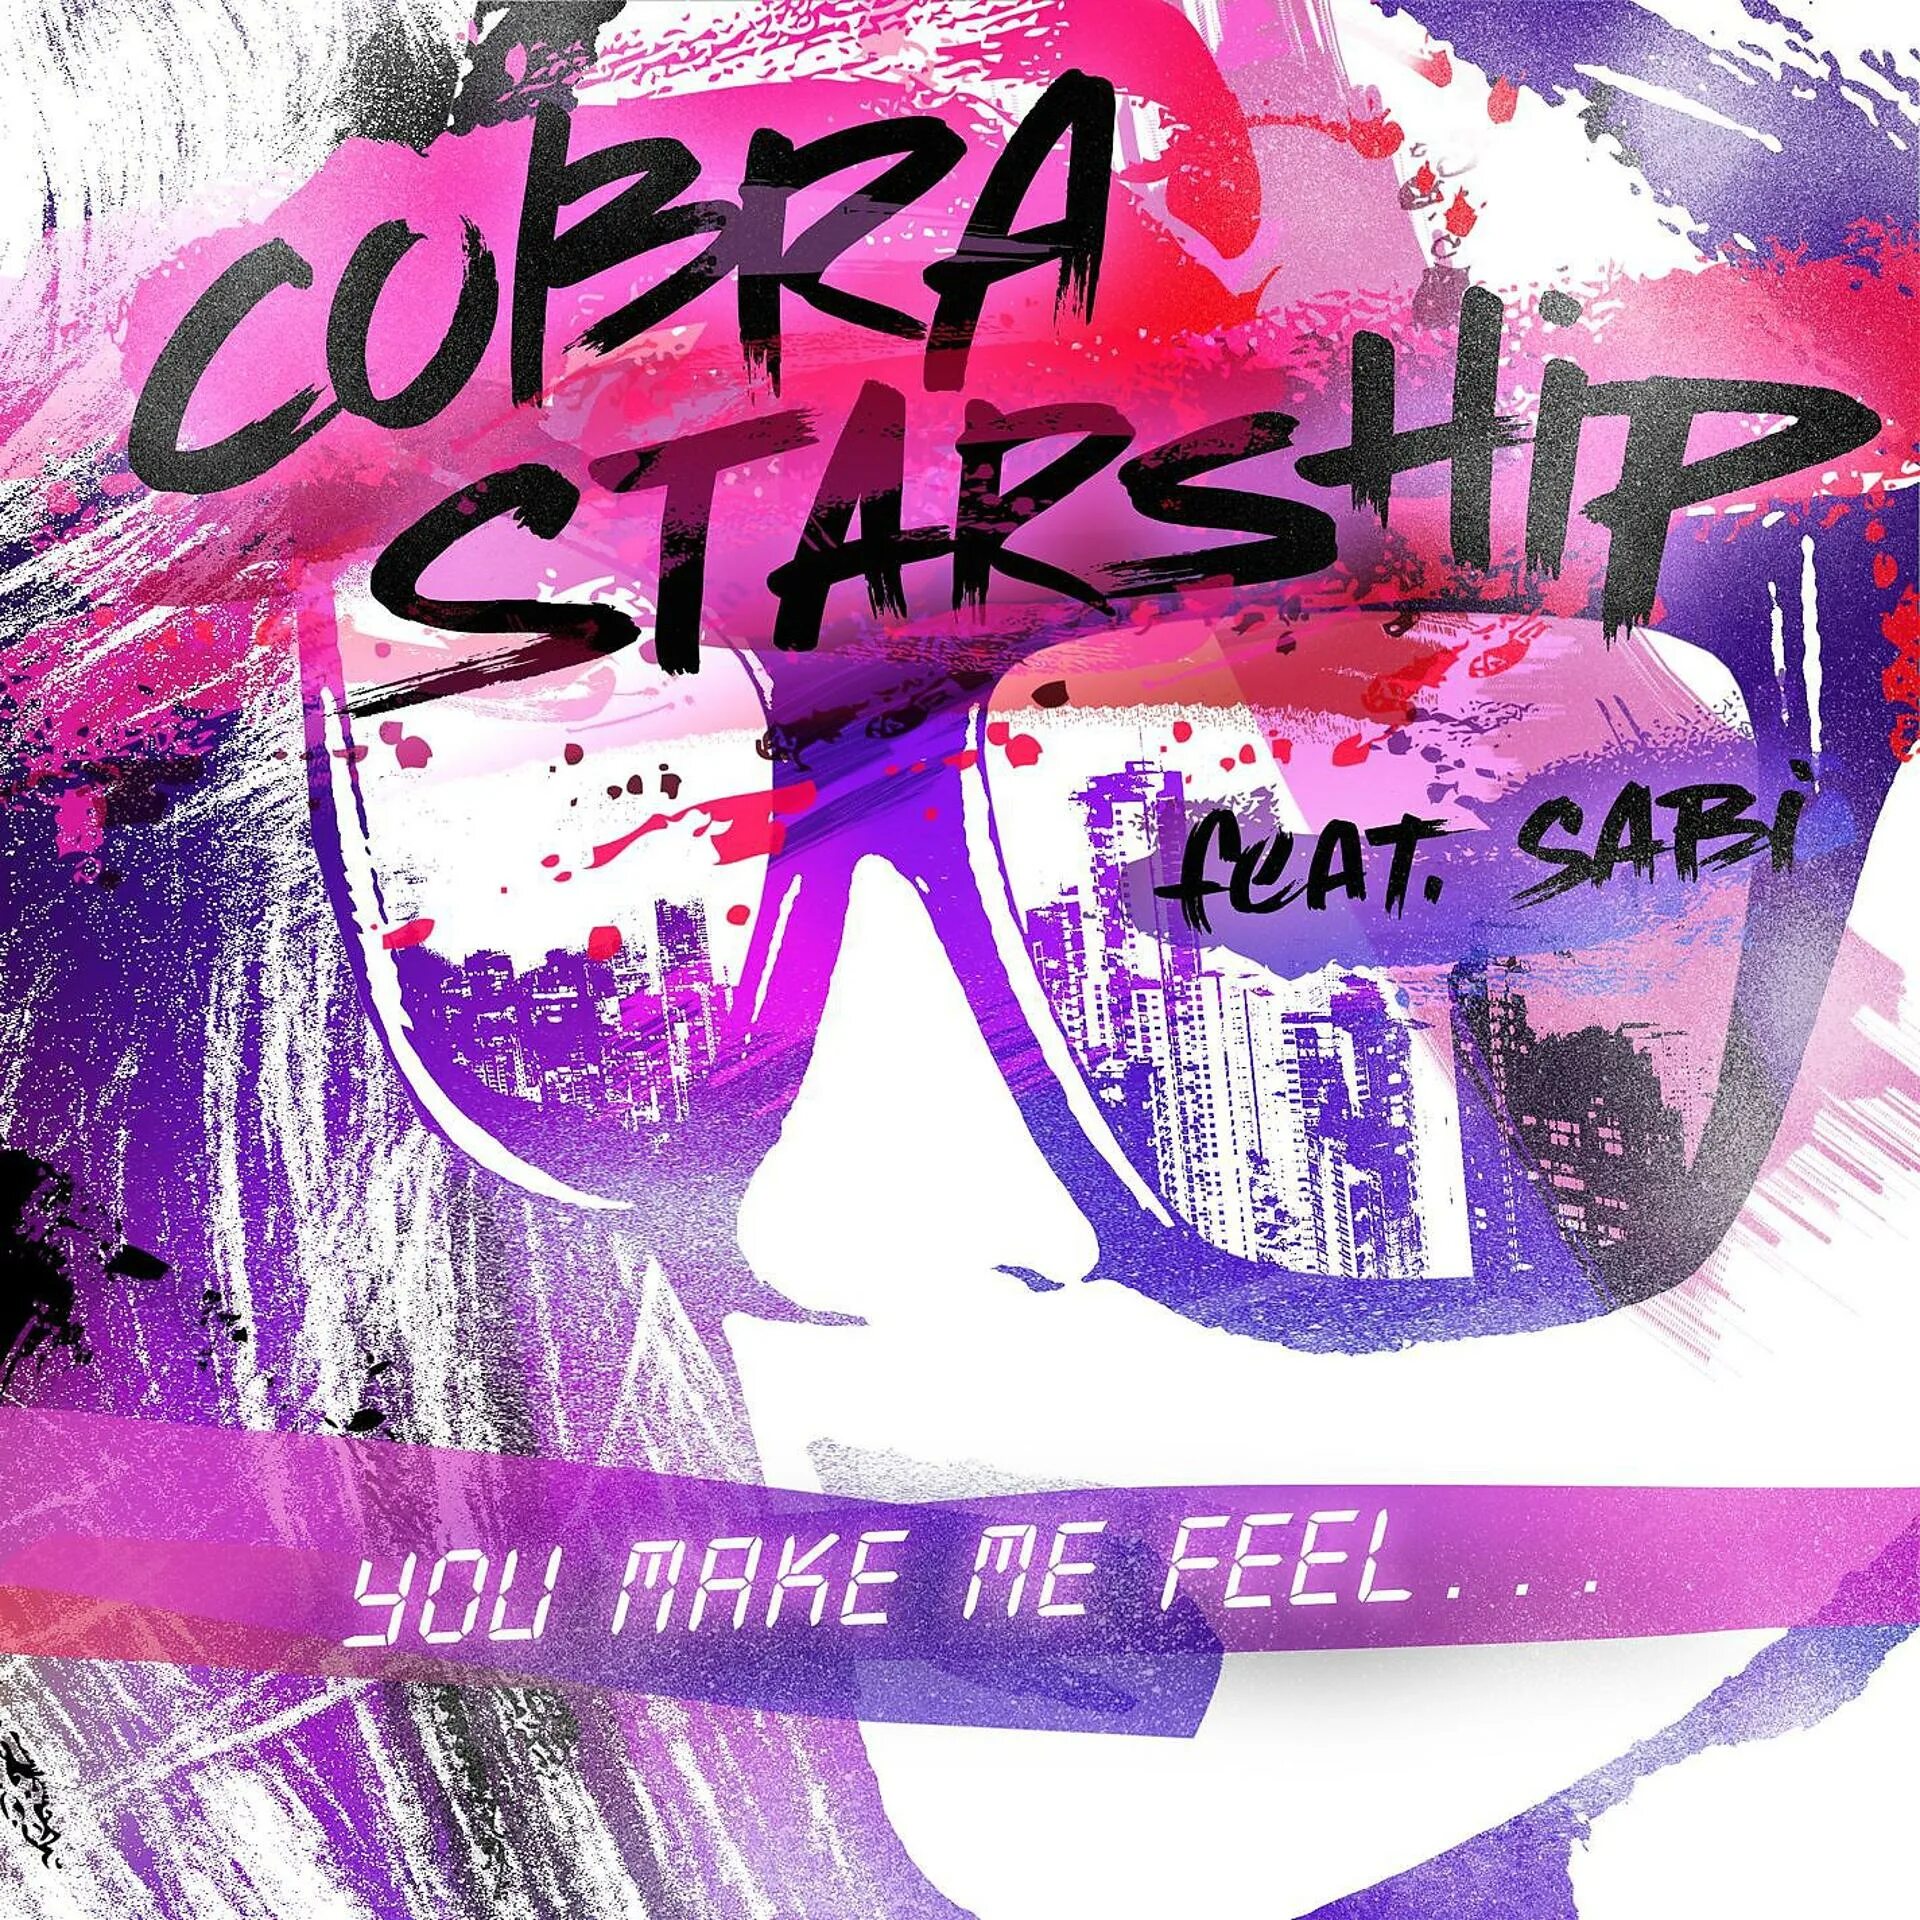 You make me feel Cobra. Cobra Starship. You make me feel. Cobra Starship - you make me feel... (Feat. Sabi).